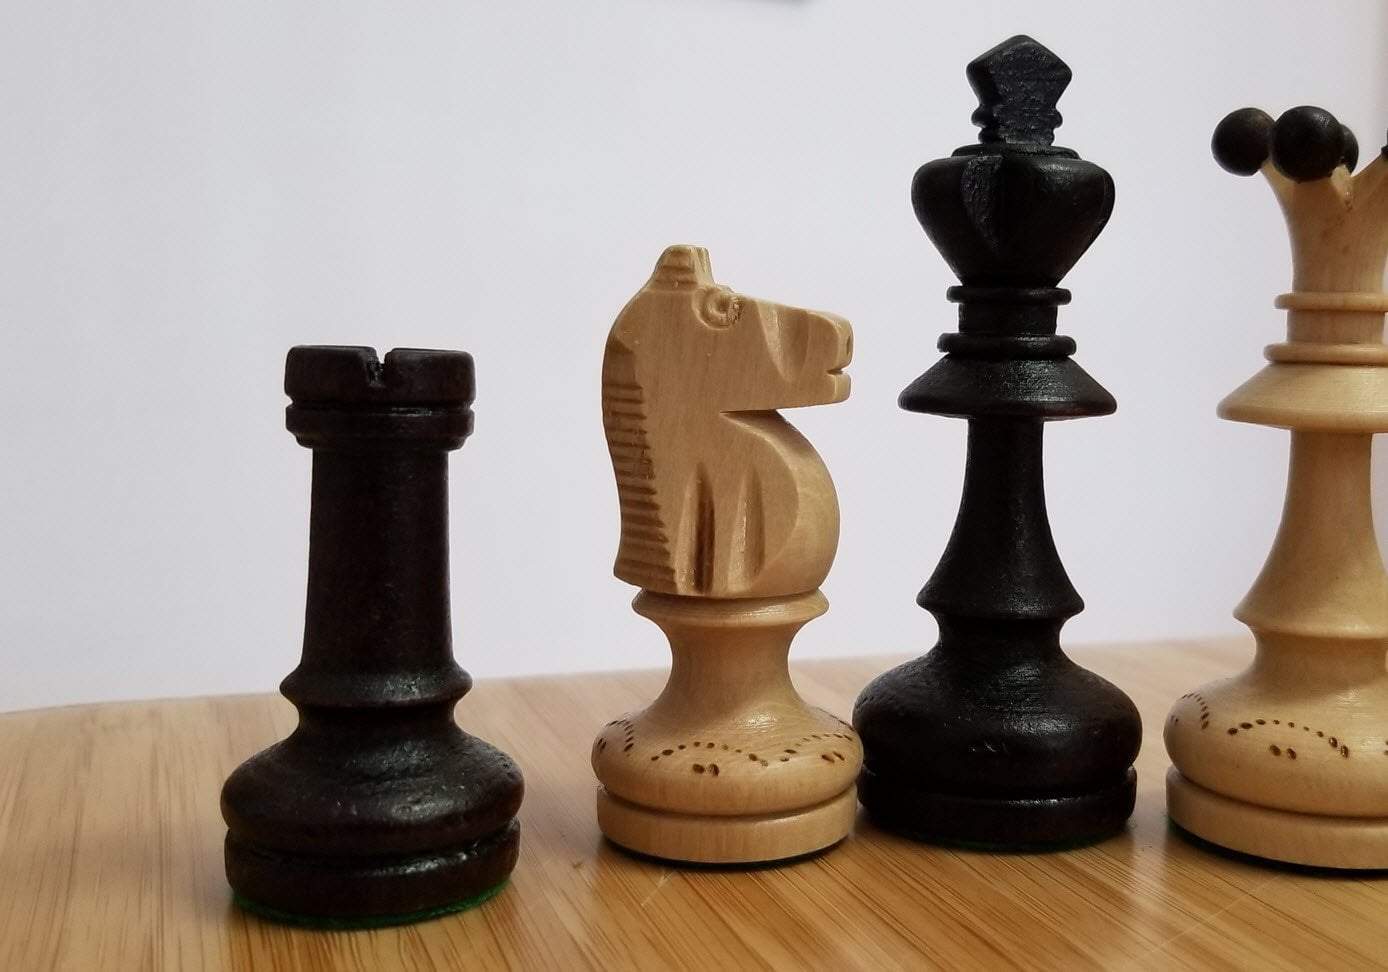 SINGLE REPLACEMENT PIECES: 20" Polish Chess Set Piece